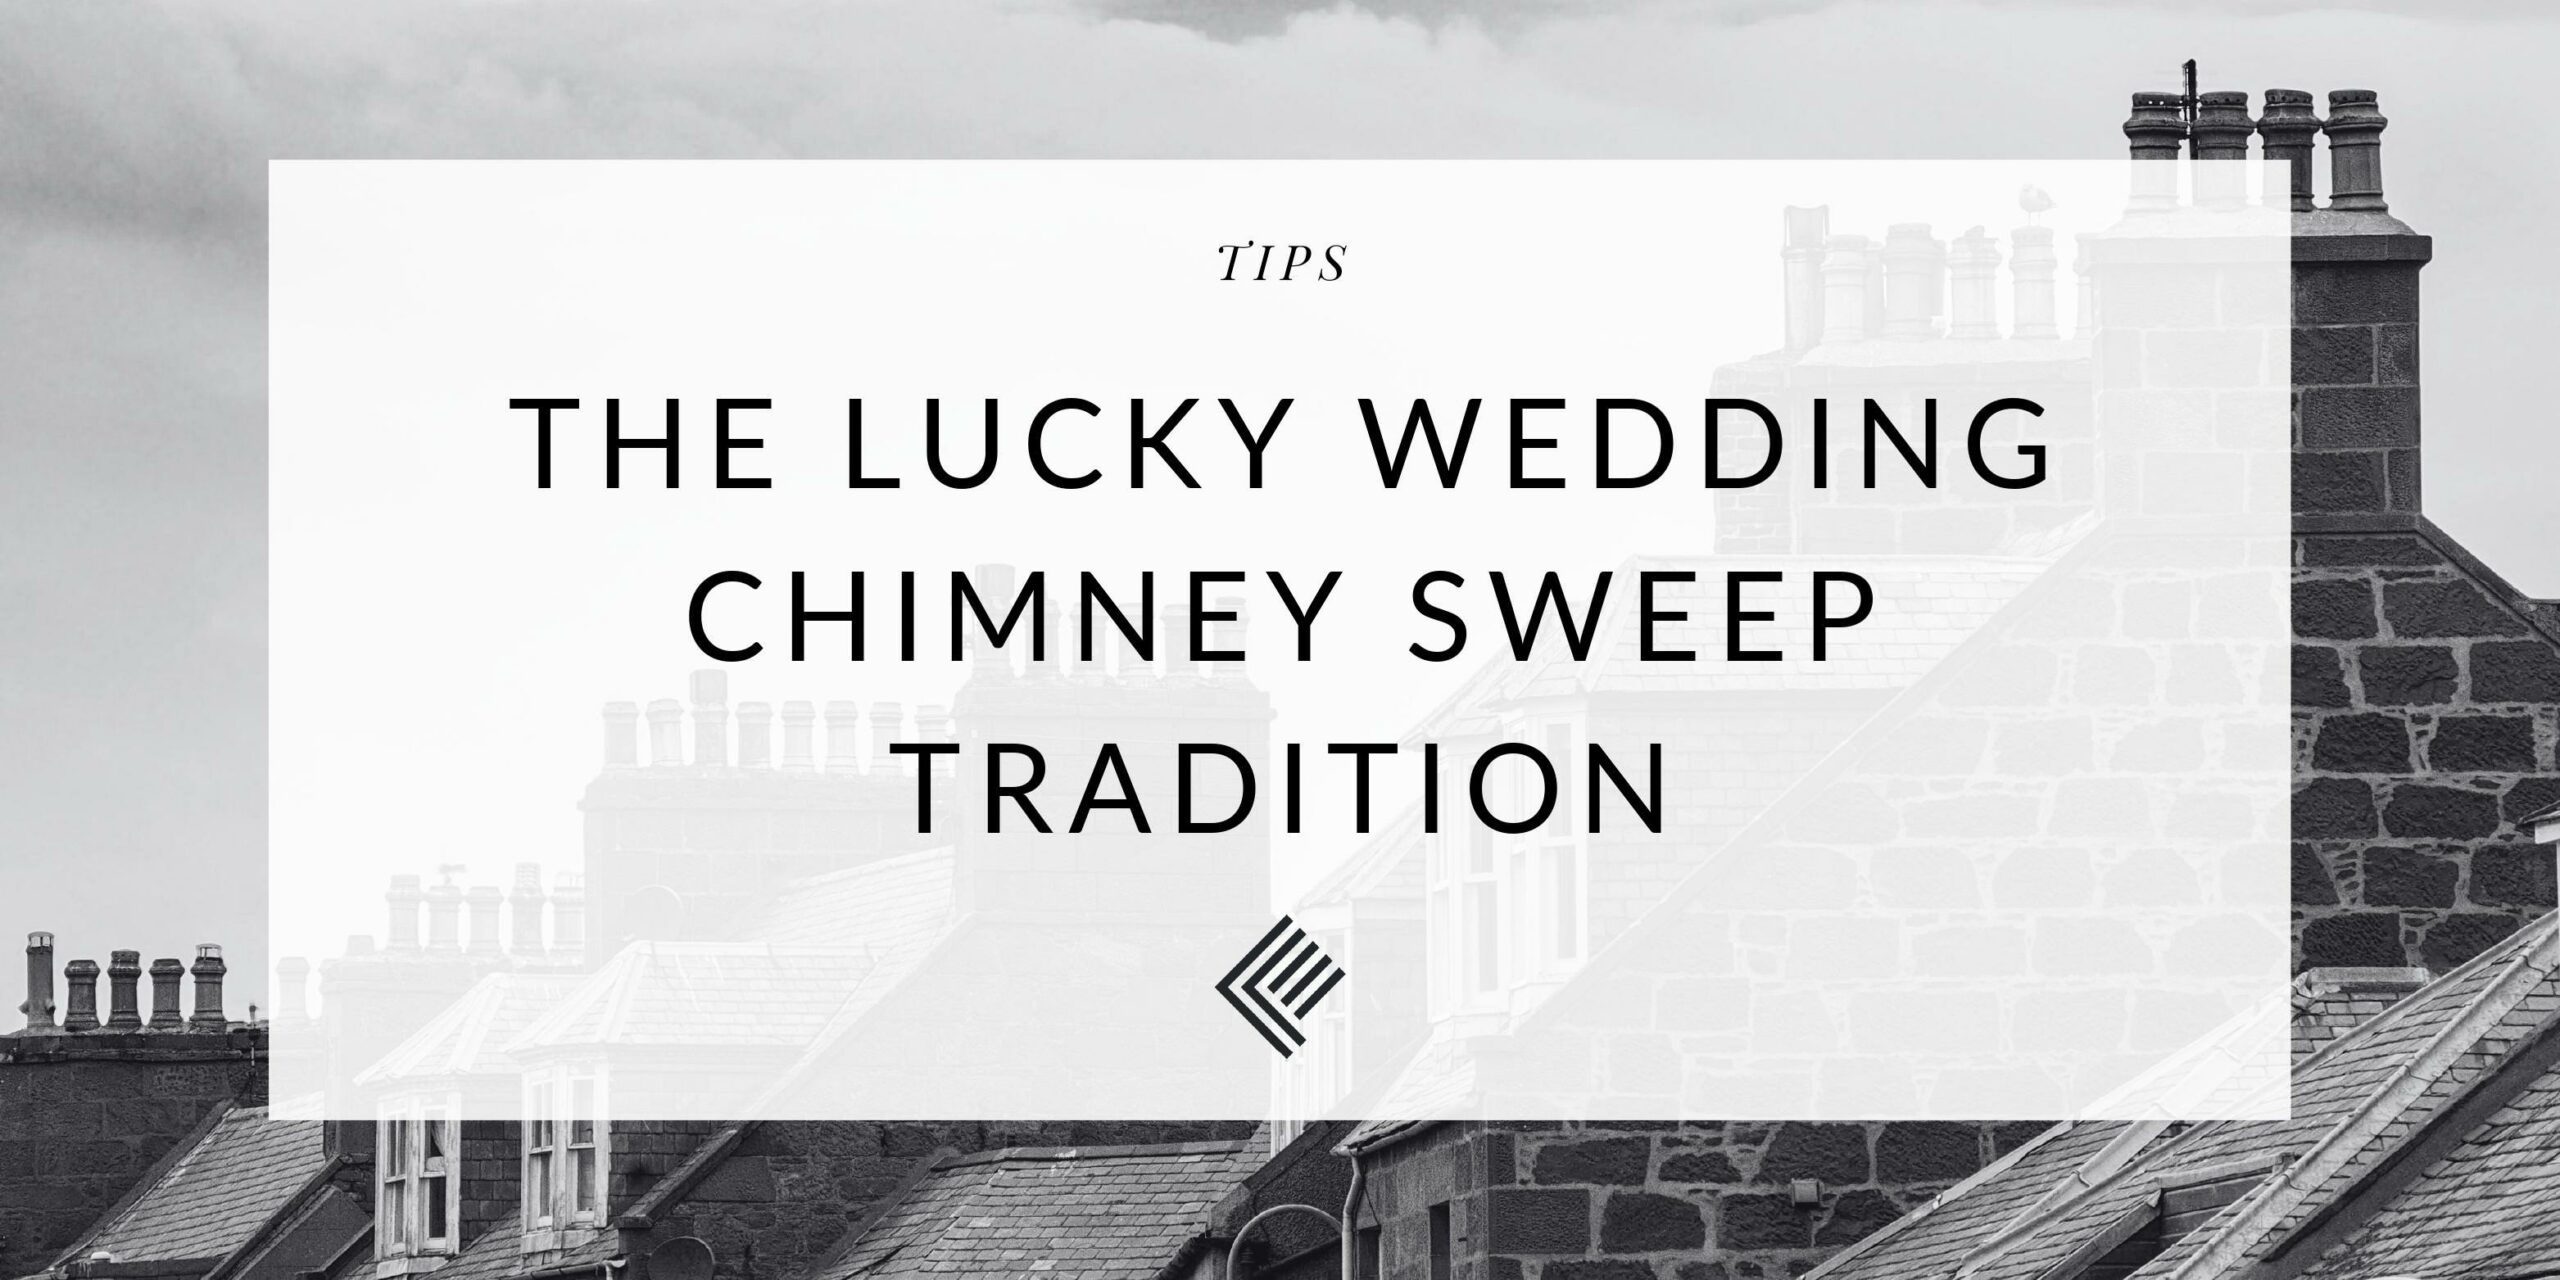 Wedding-Chimney-Sweep-Introduction-To-Blog-Image